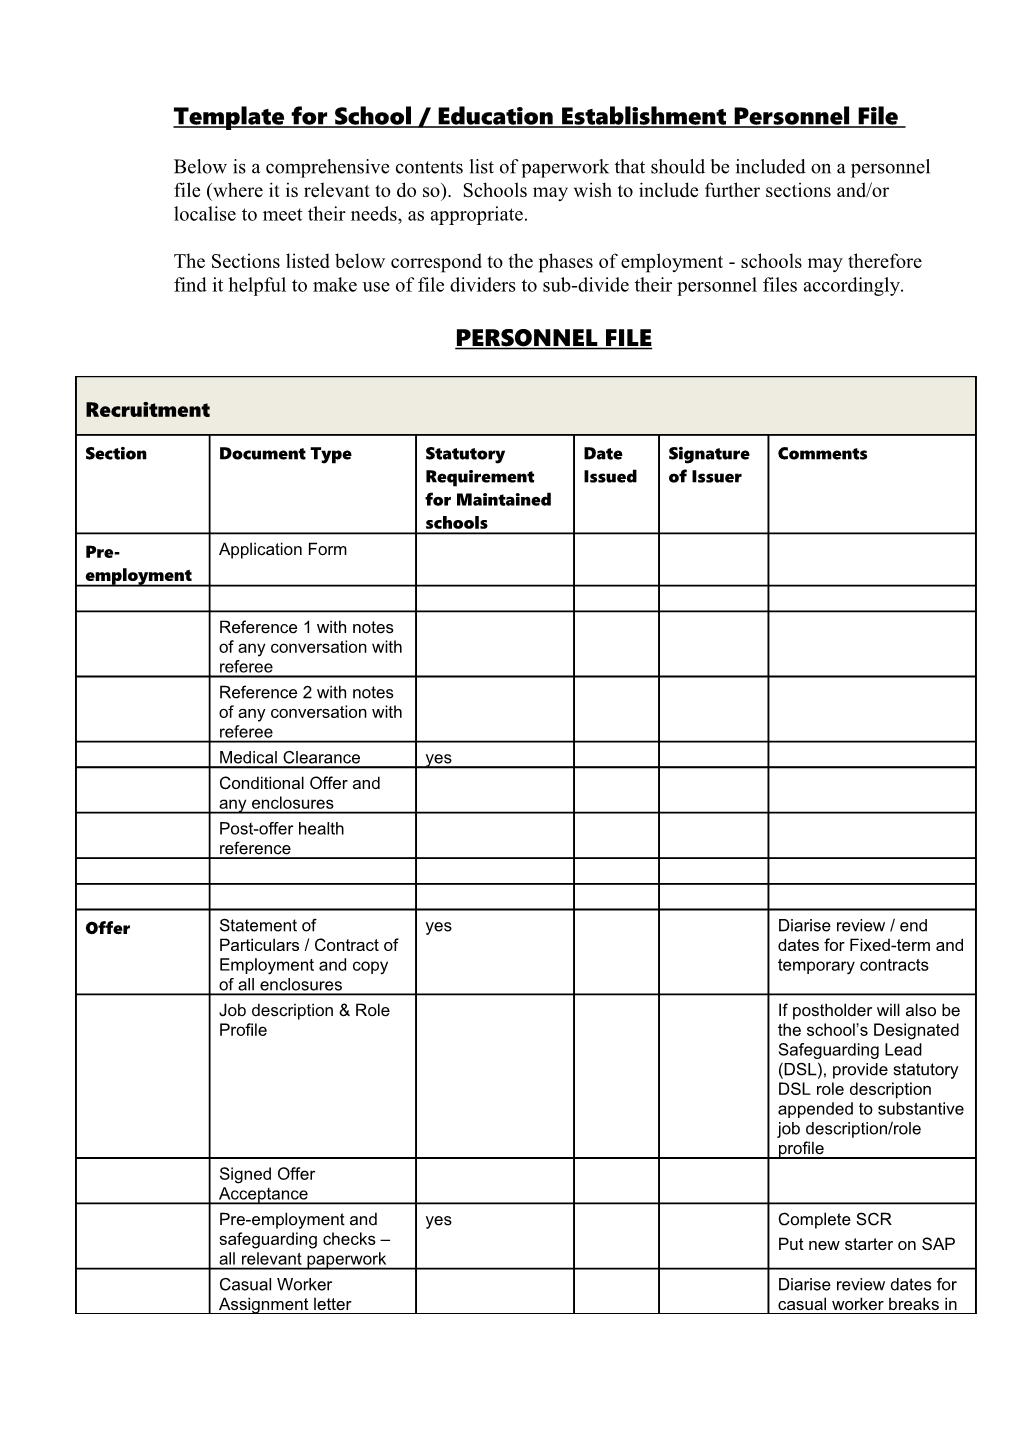 Template for School / Education Establishment Personnel File Contents